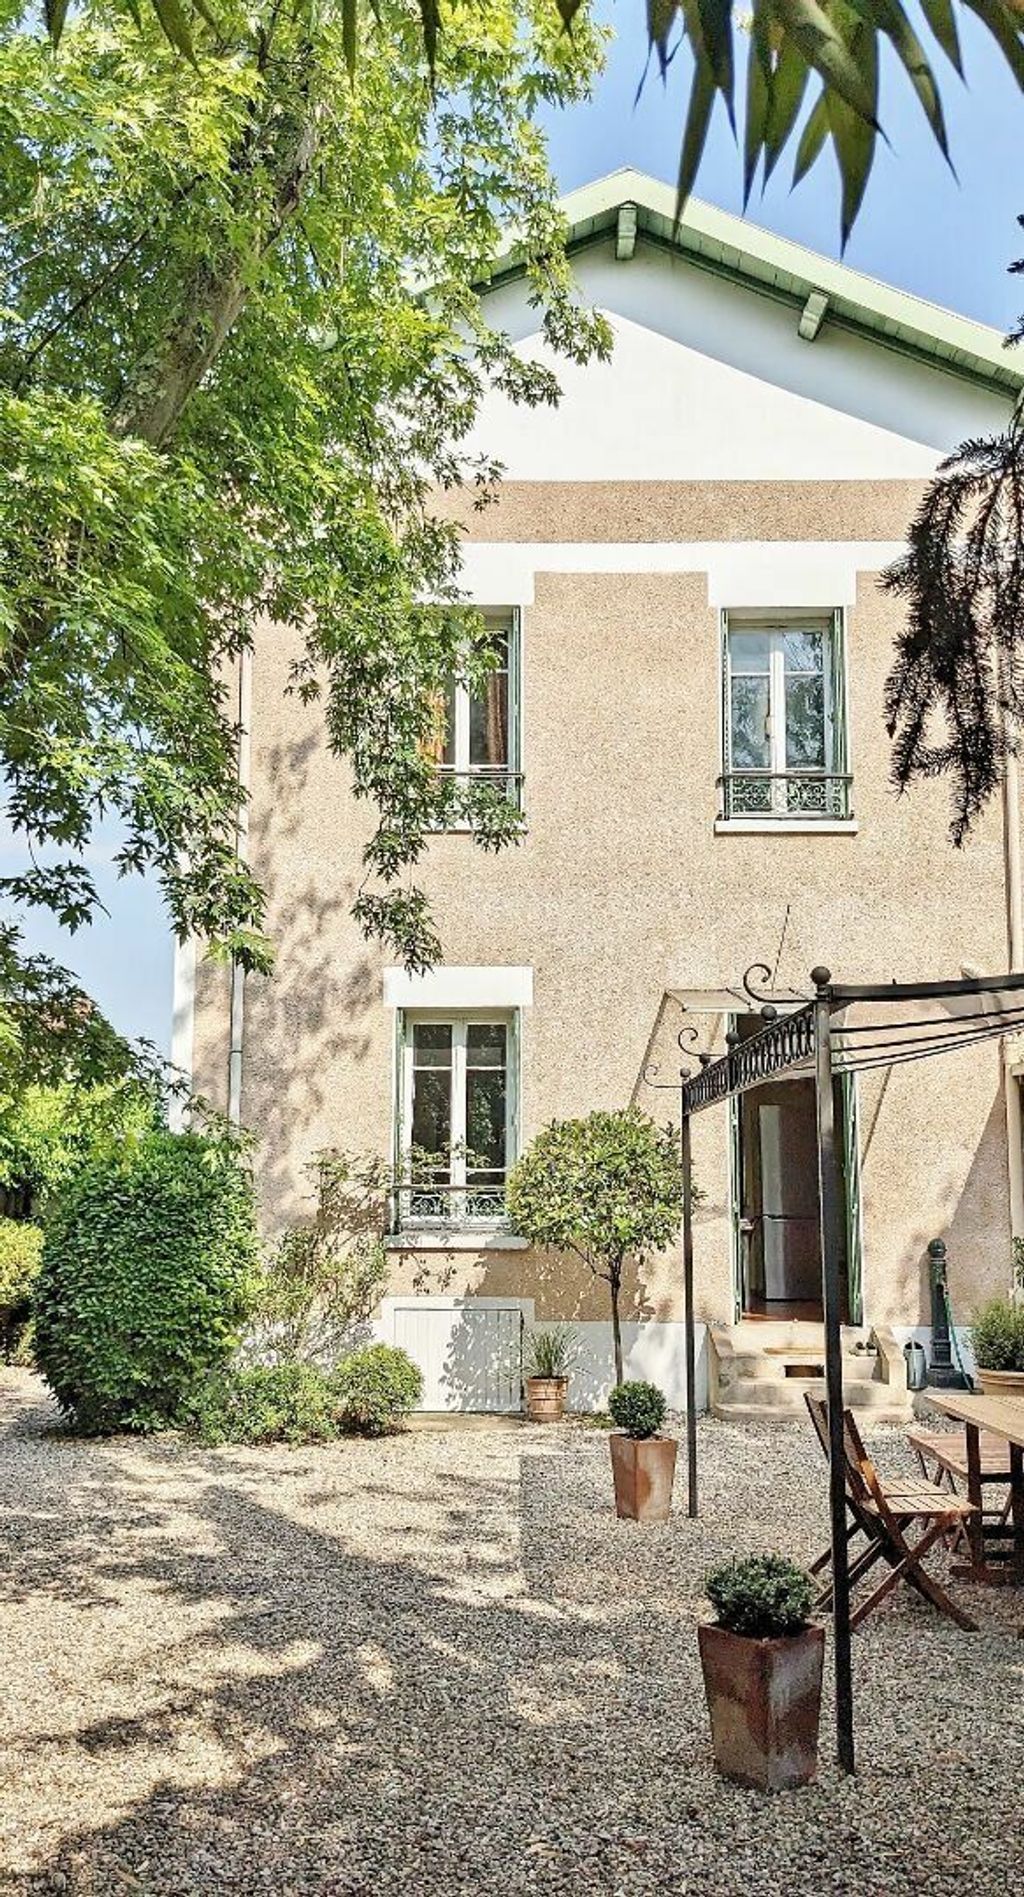 Achat maison à vendre 4 chambres 133 m² - Tassin-la-Demi-Lune